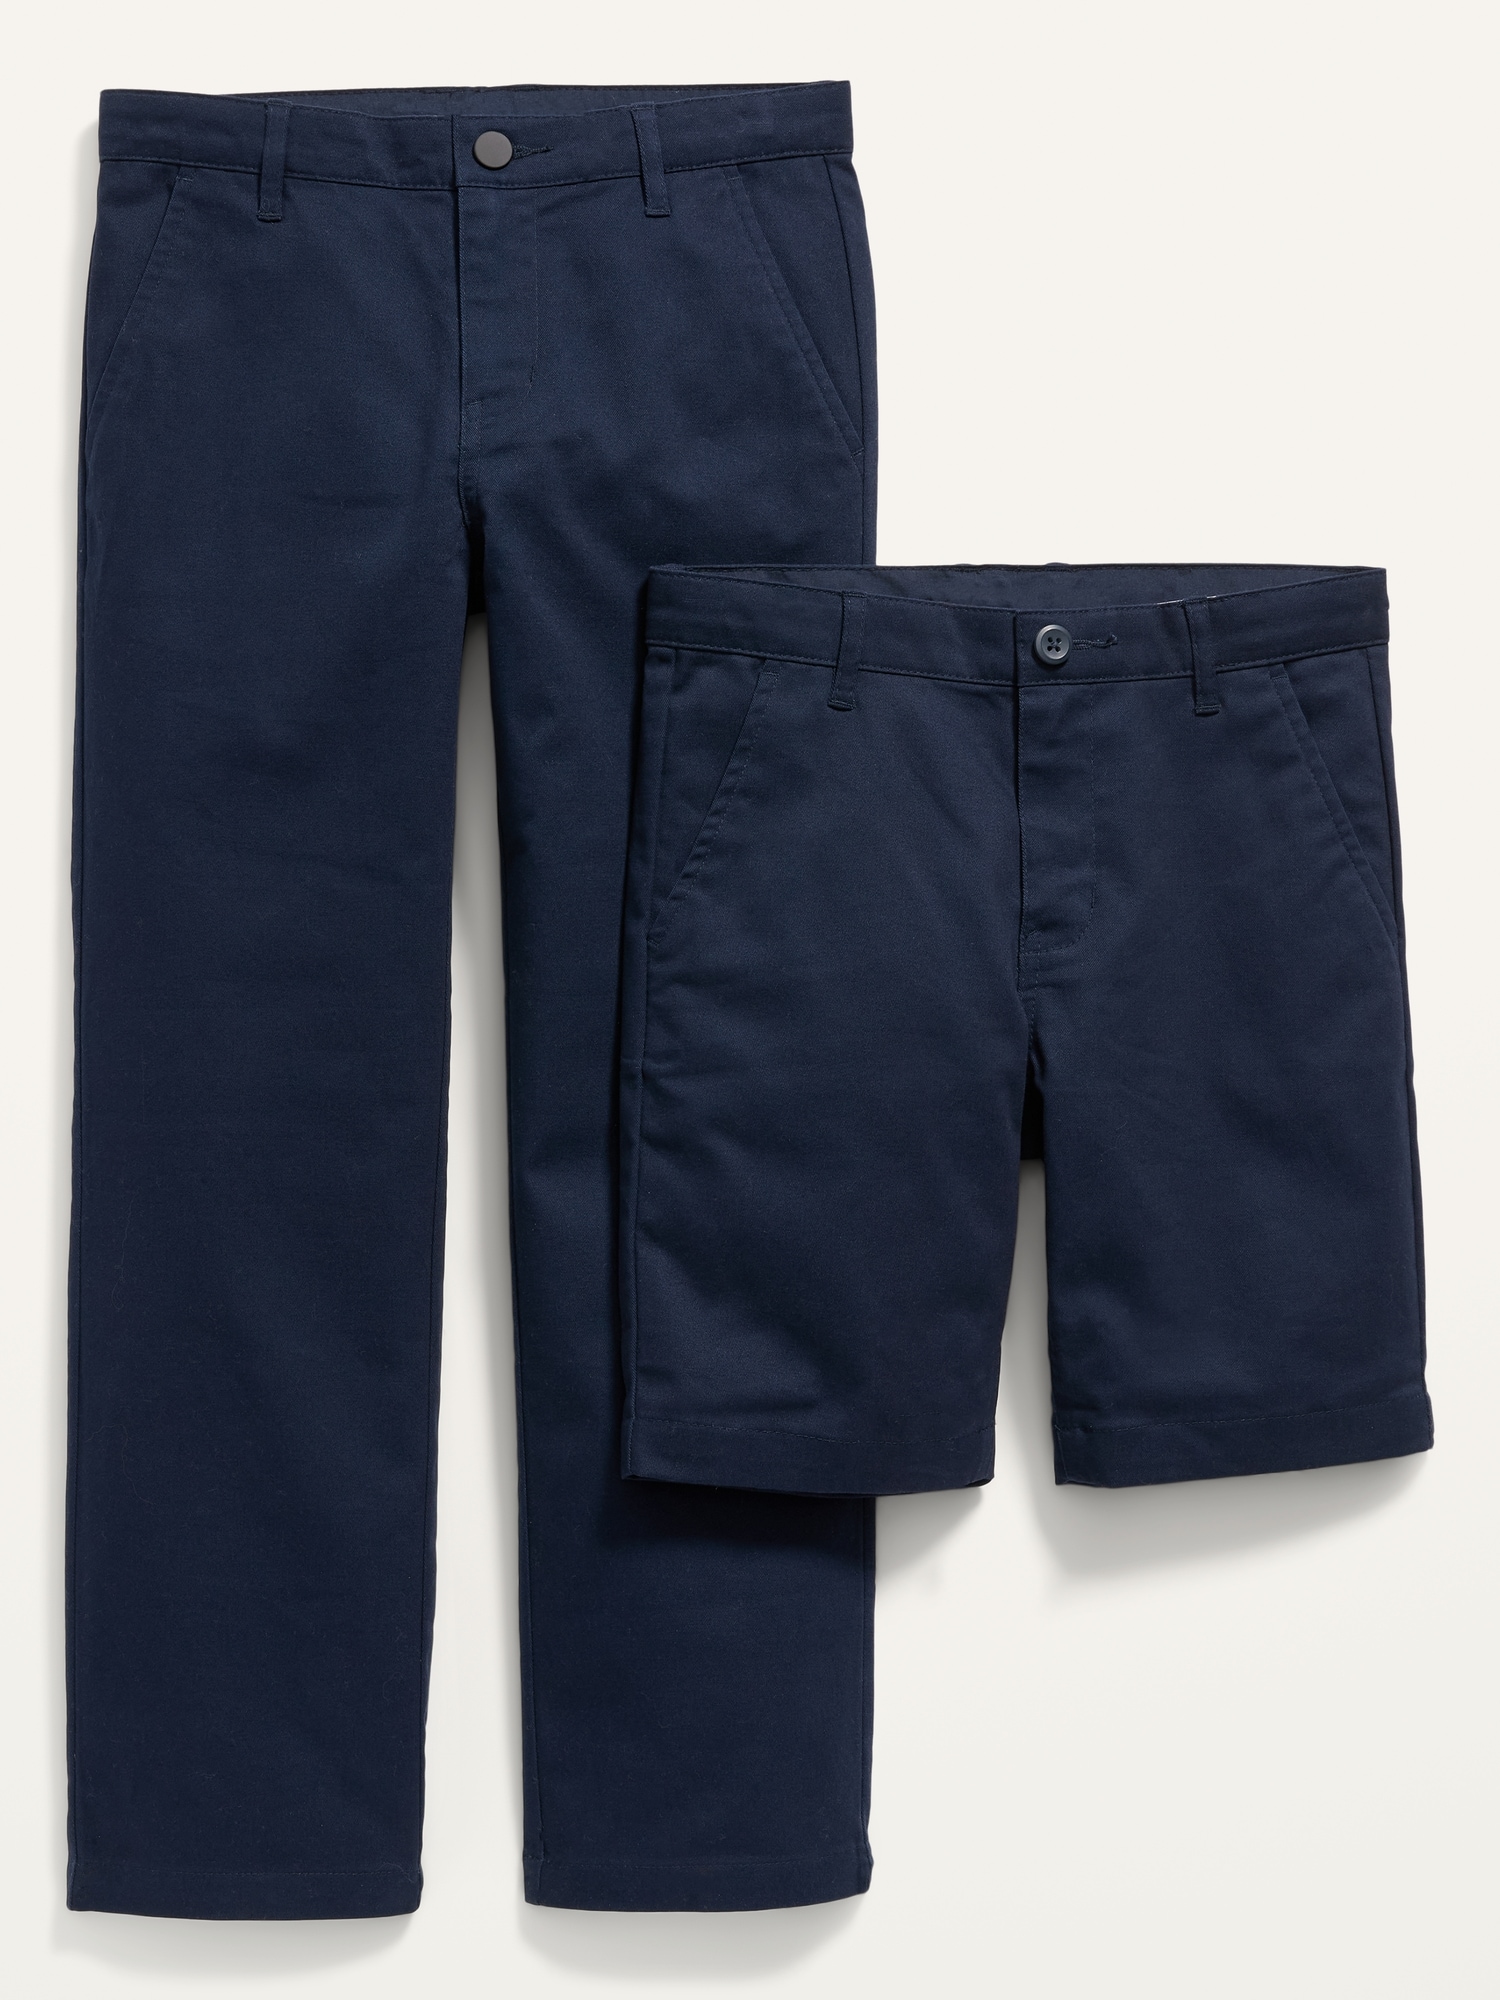 2 Pack Men's Elastic Waist Pull-On Trousers, Navy & Grey